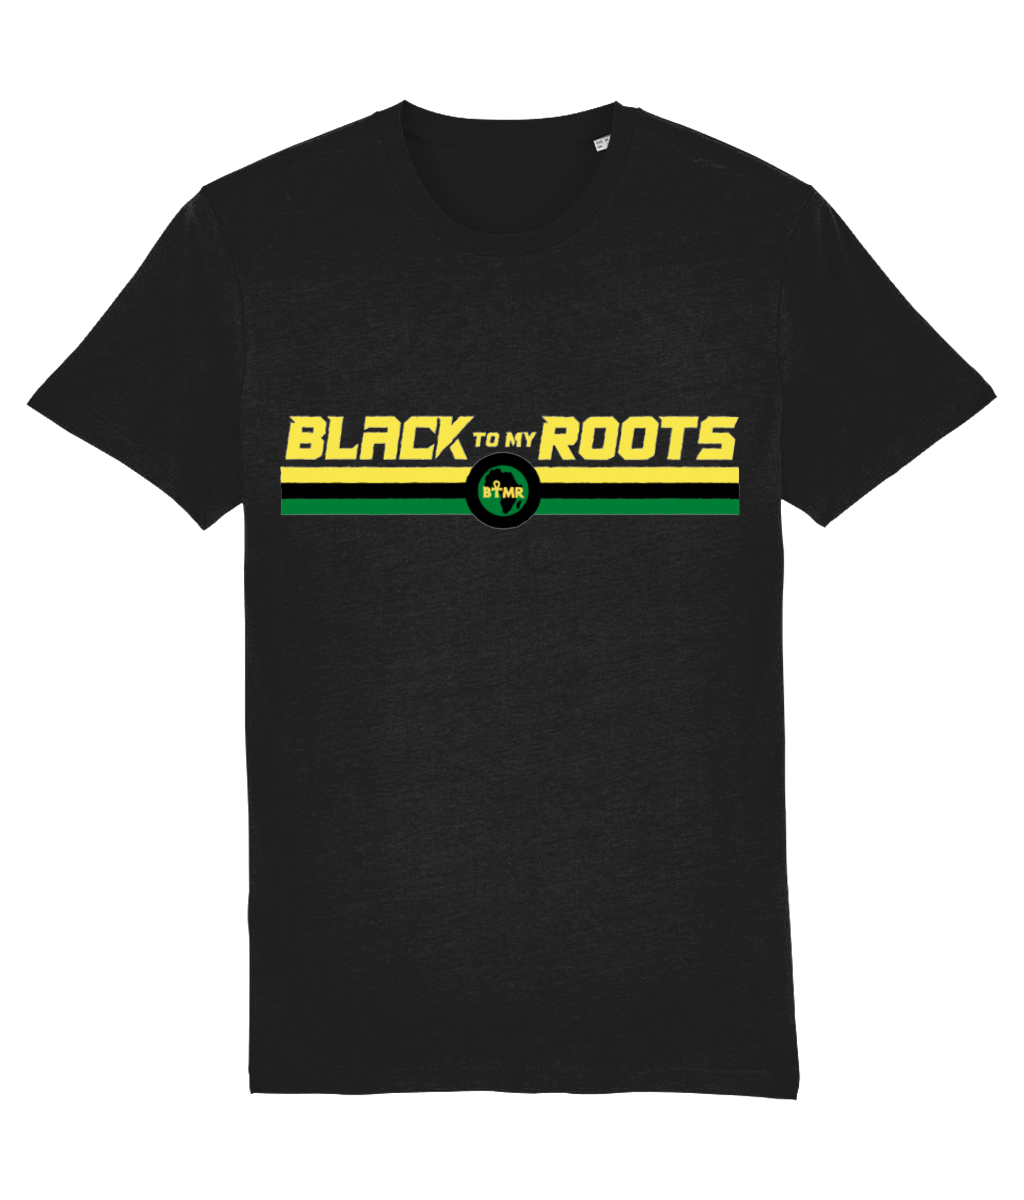 Limited Edition BlackToMyRoots Organic Cotton T Shirt